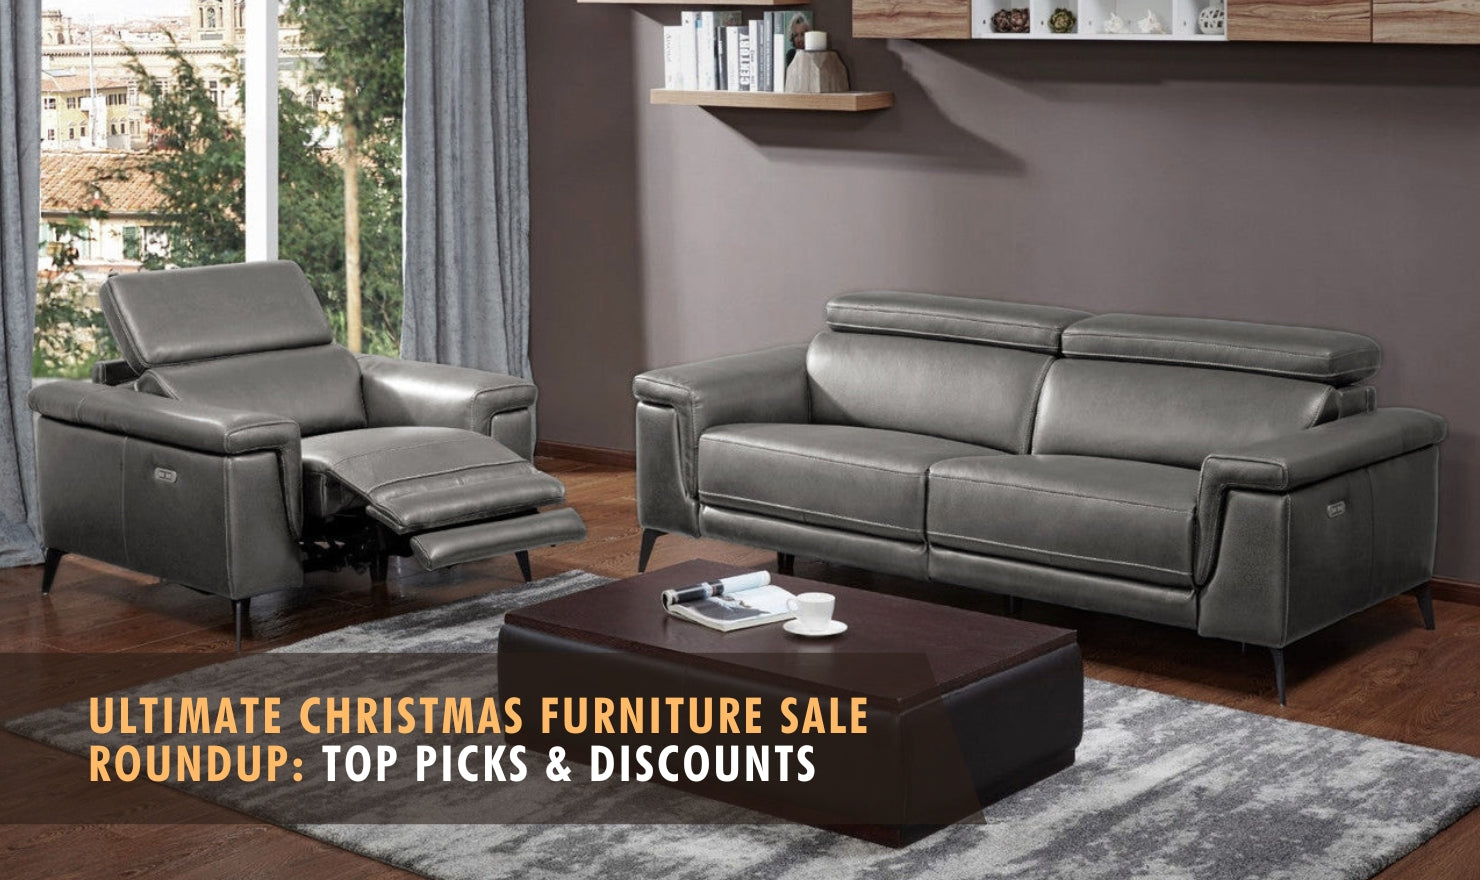 Ultimate Christmas Furniture Sale Roundup Top Picks & Discounts